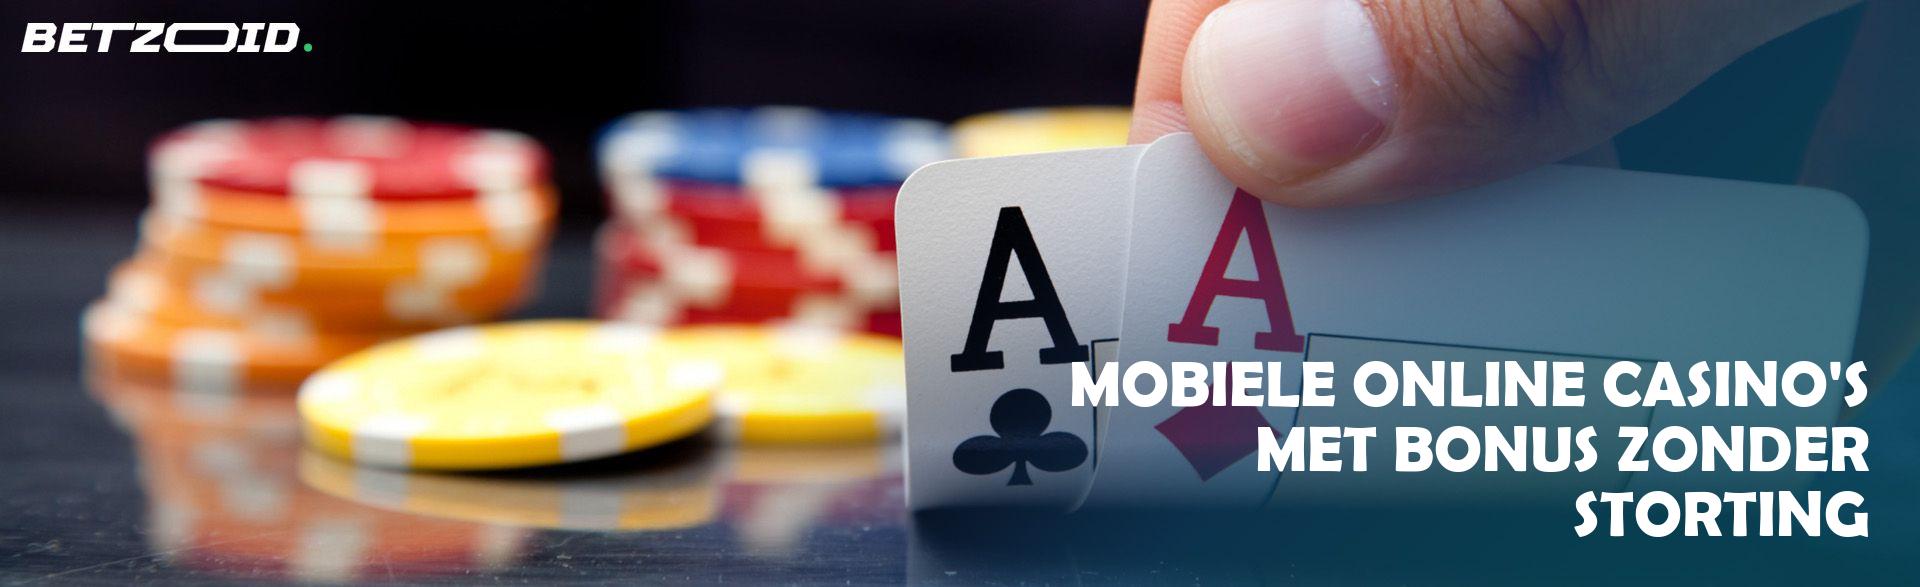 Mobiele Online Casino'